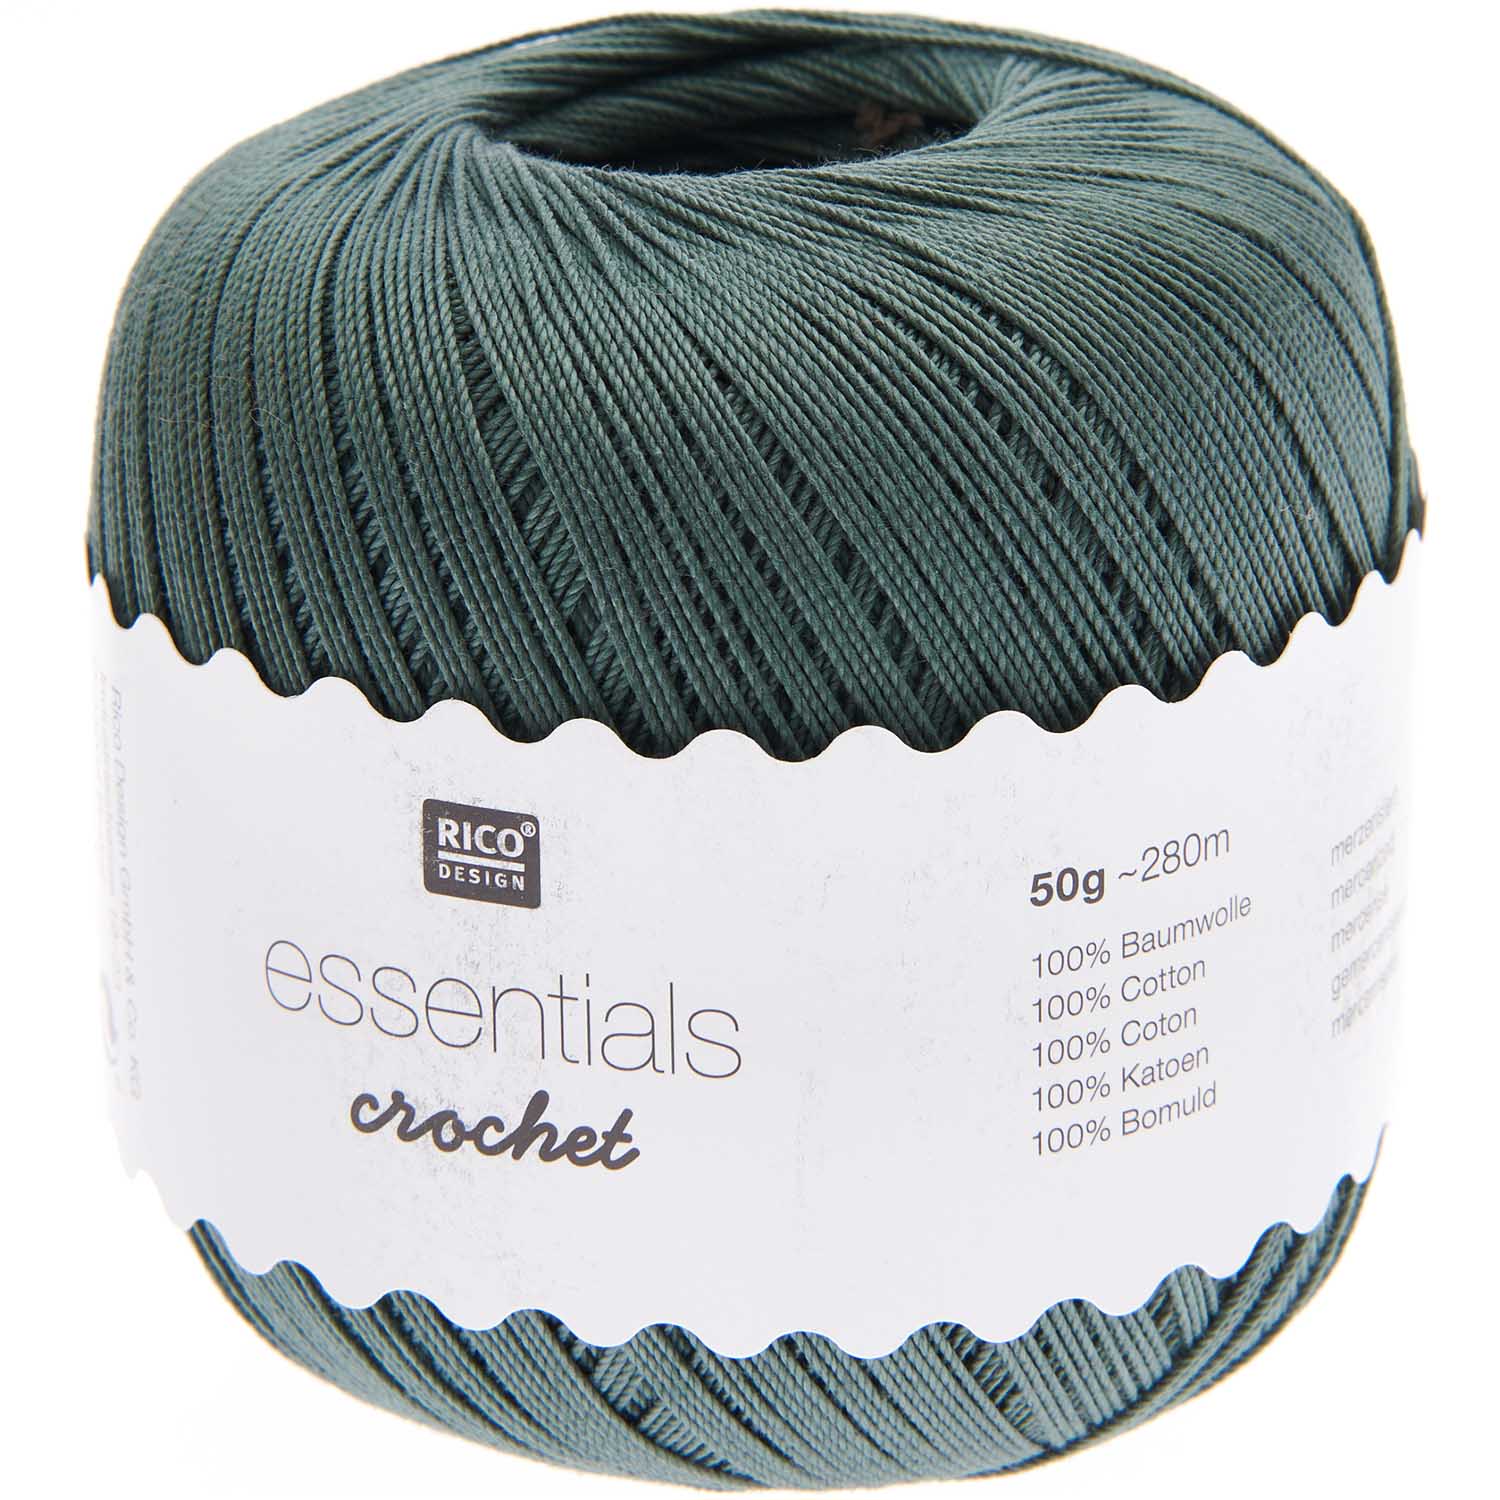 Rico Essentials Crochet, efeu